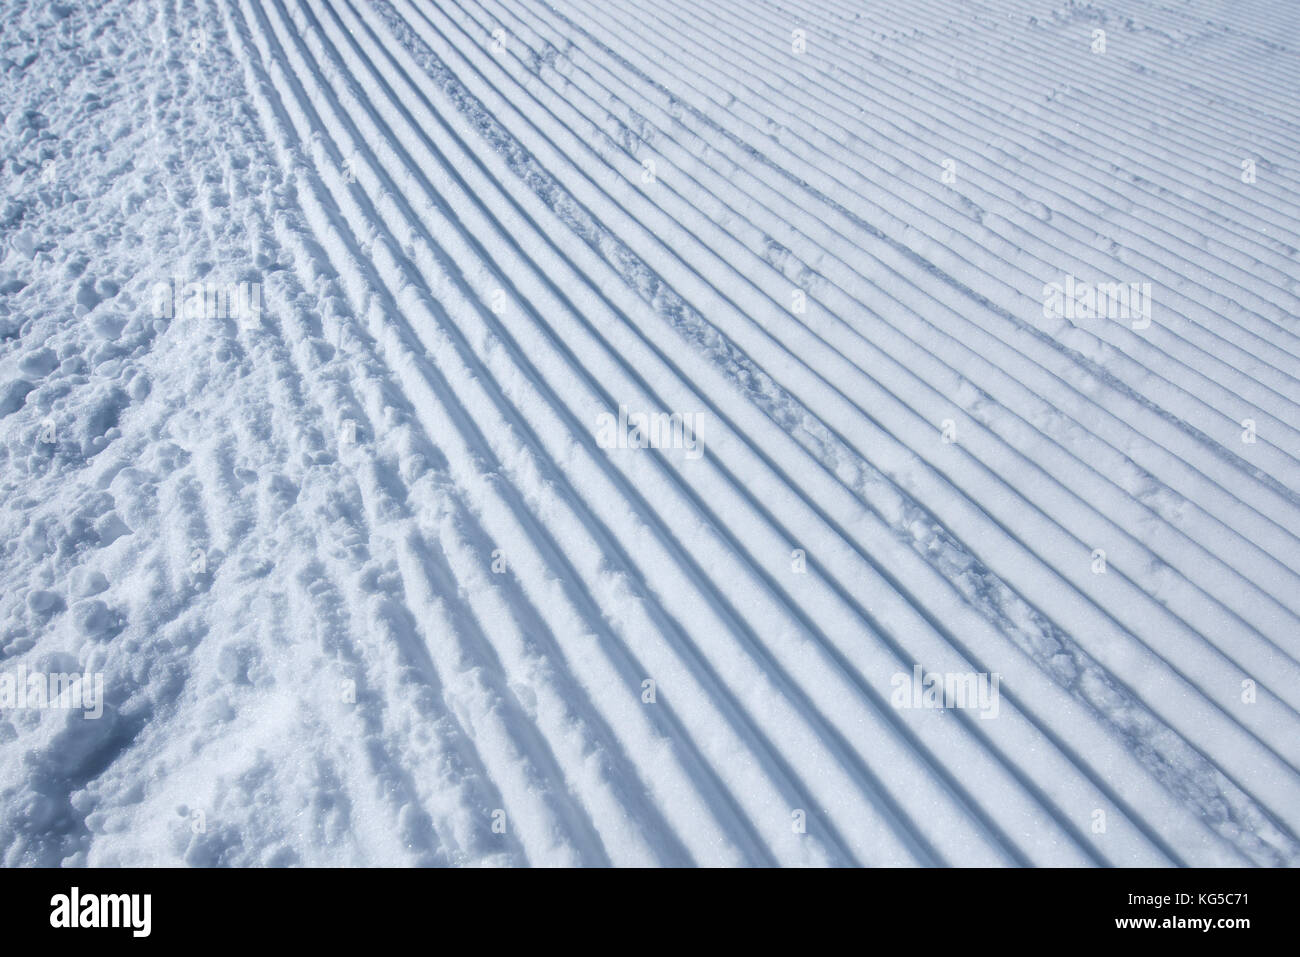 Groomed ski run track in snow, winter season background Stock Photo